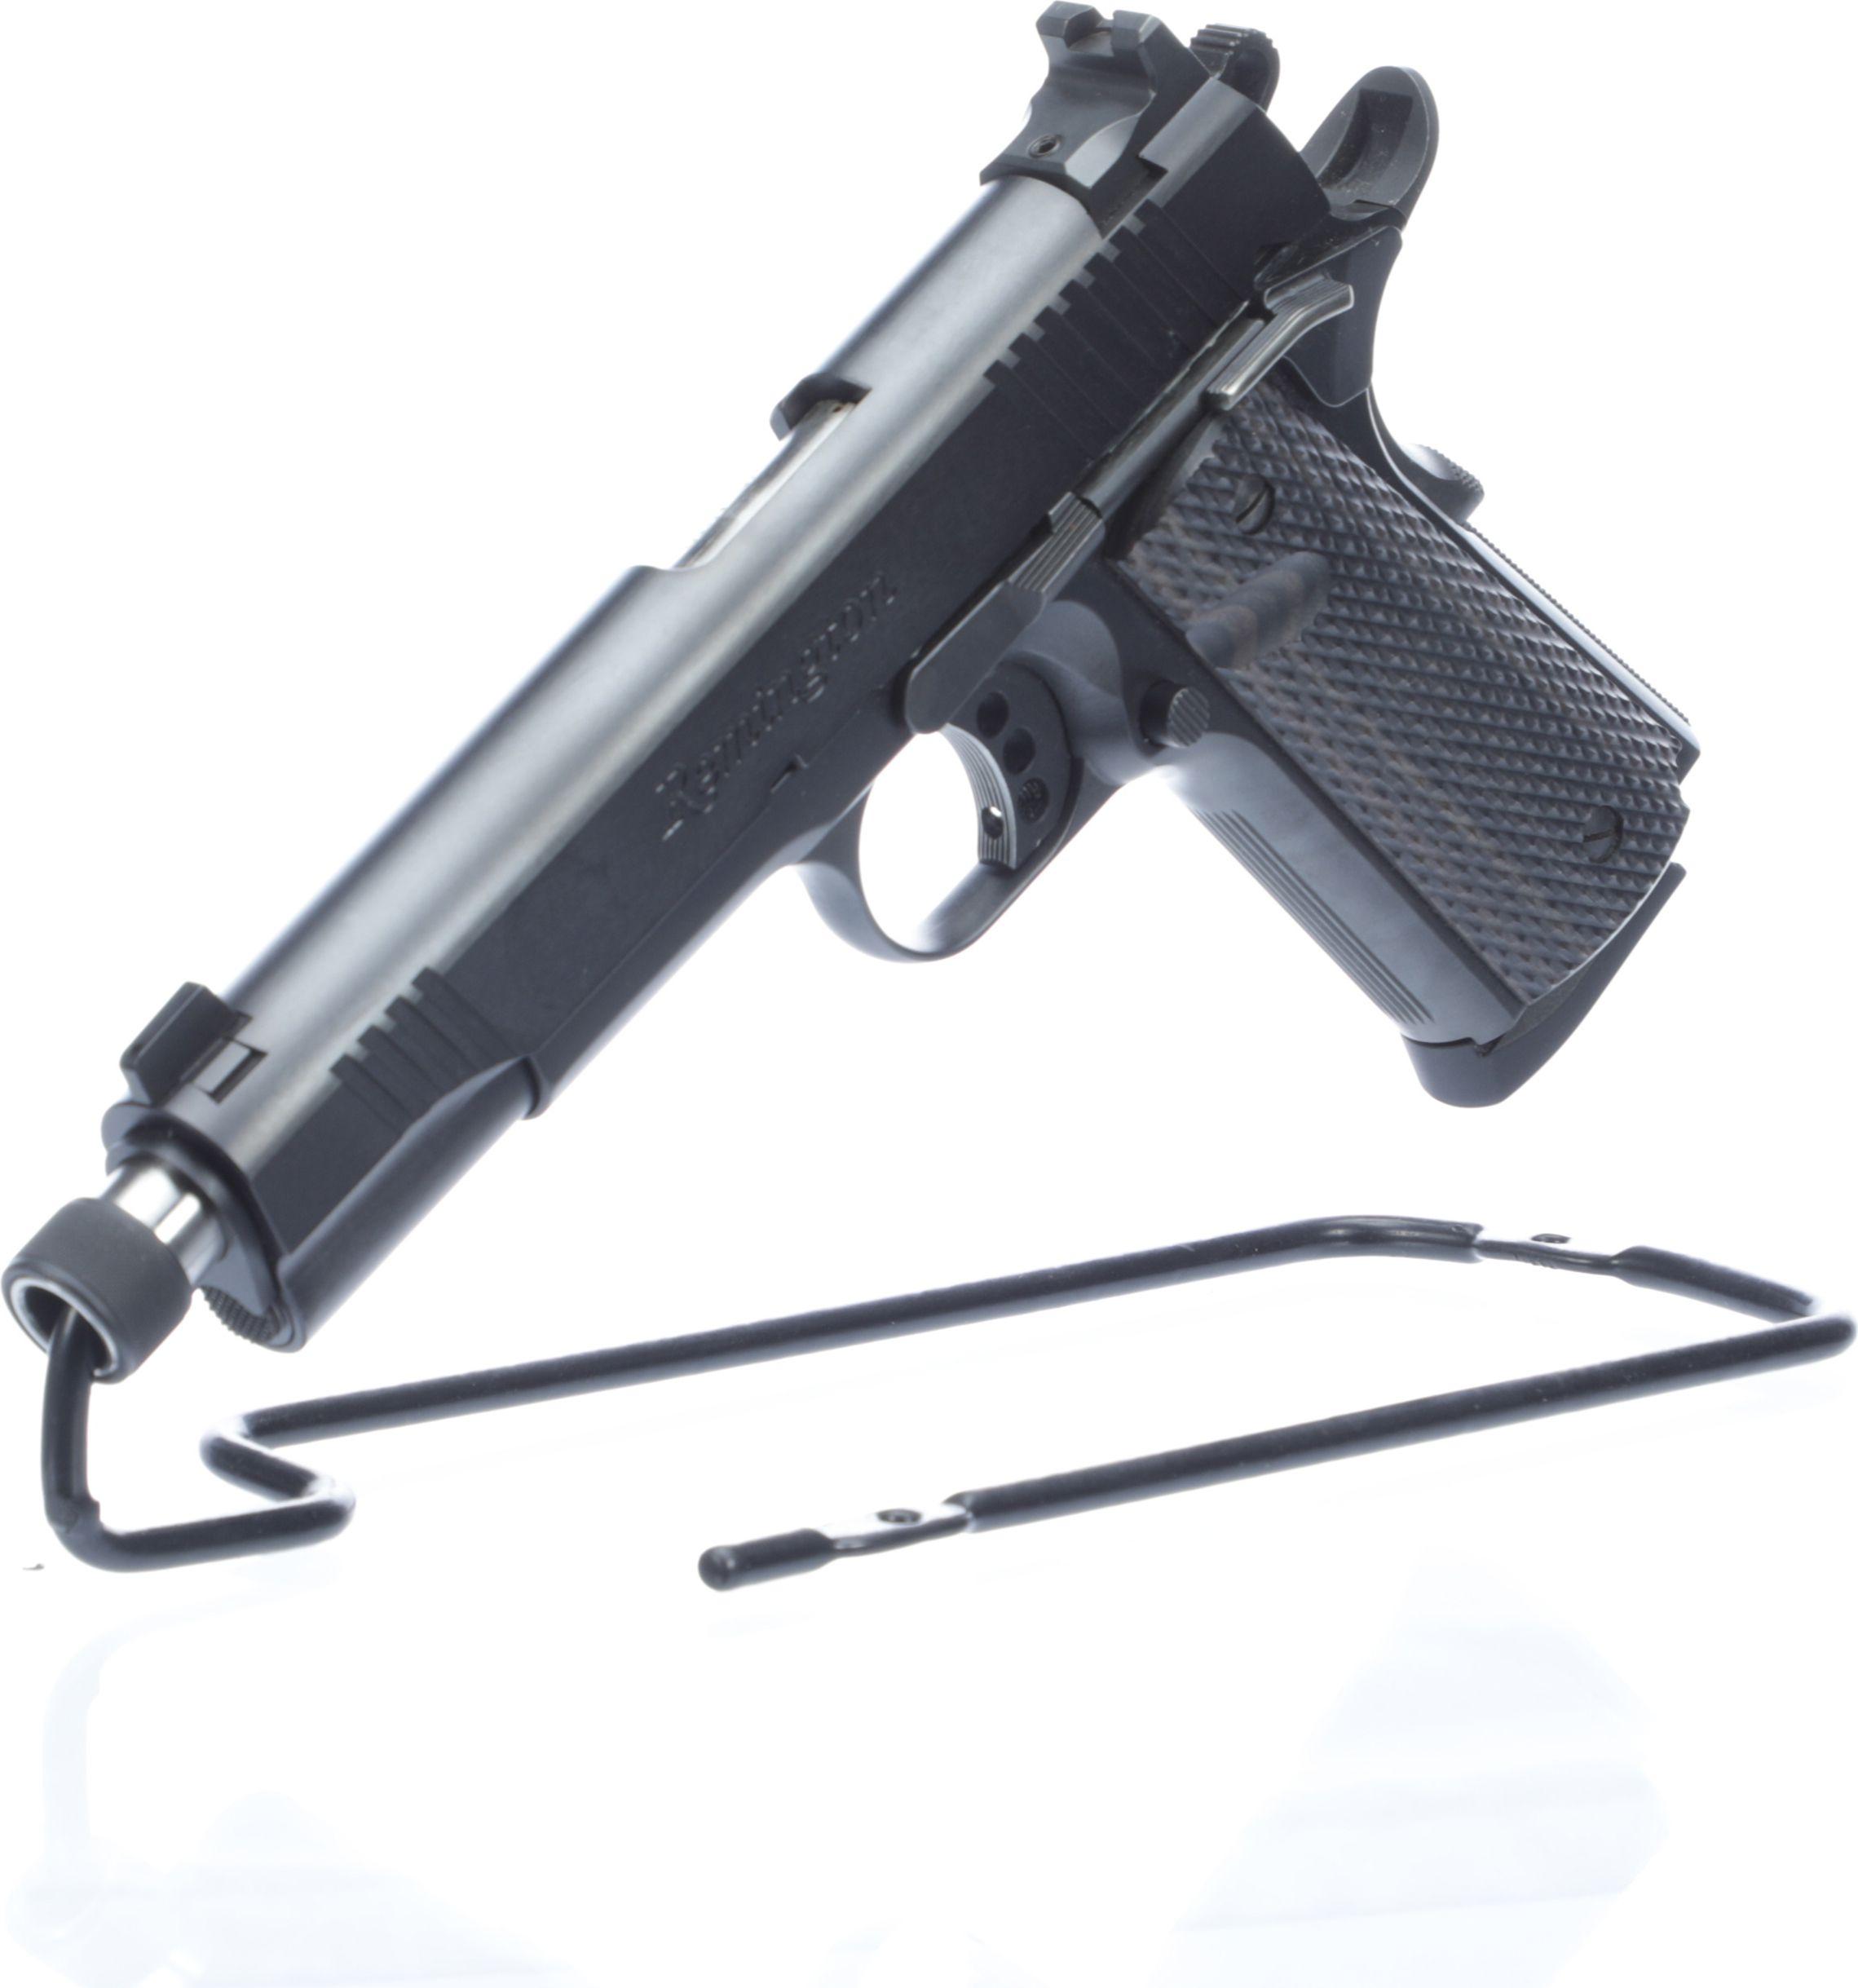 Remington Model 1911 R1 Enhanced Pistol with Case